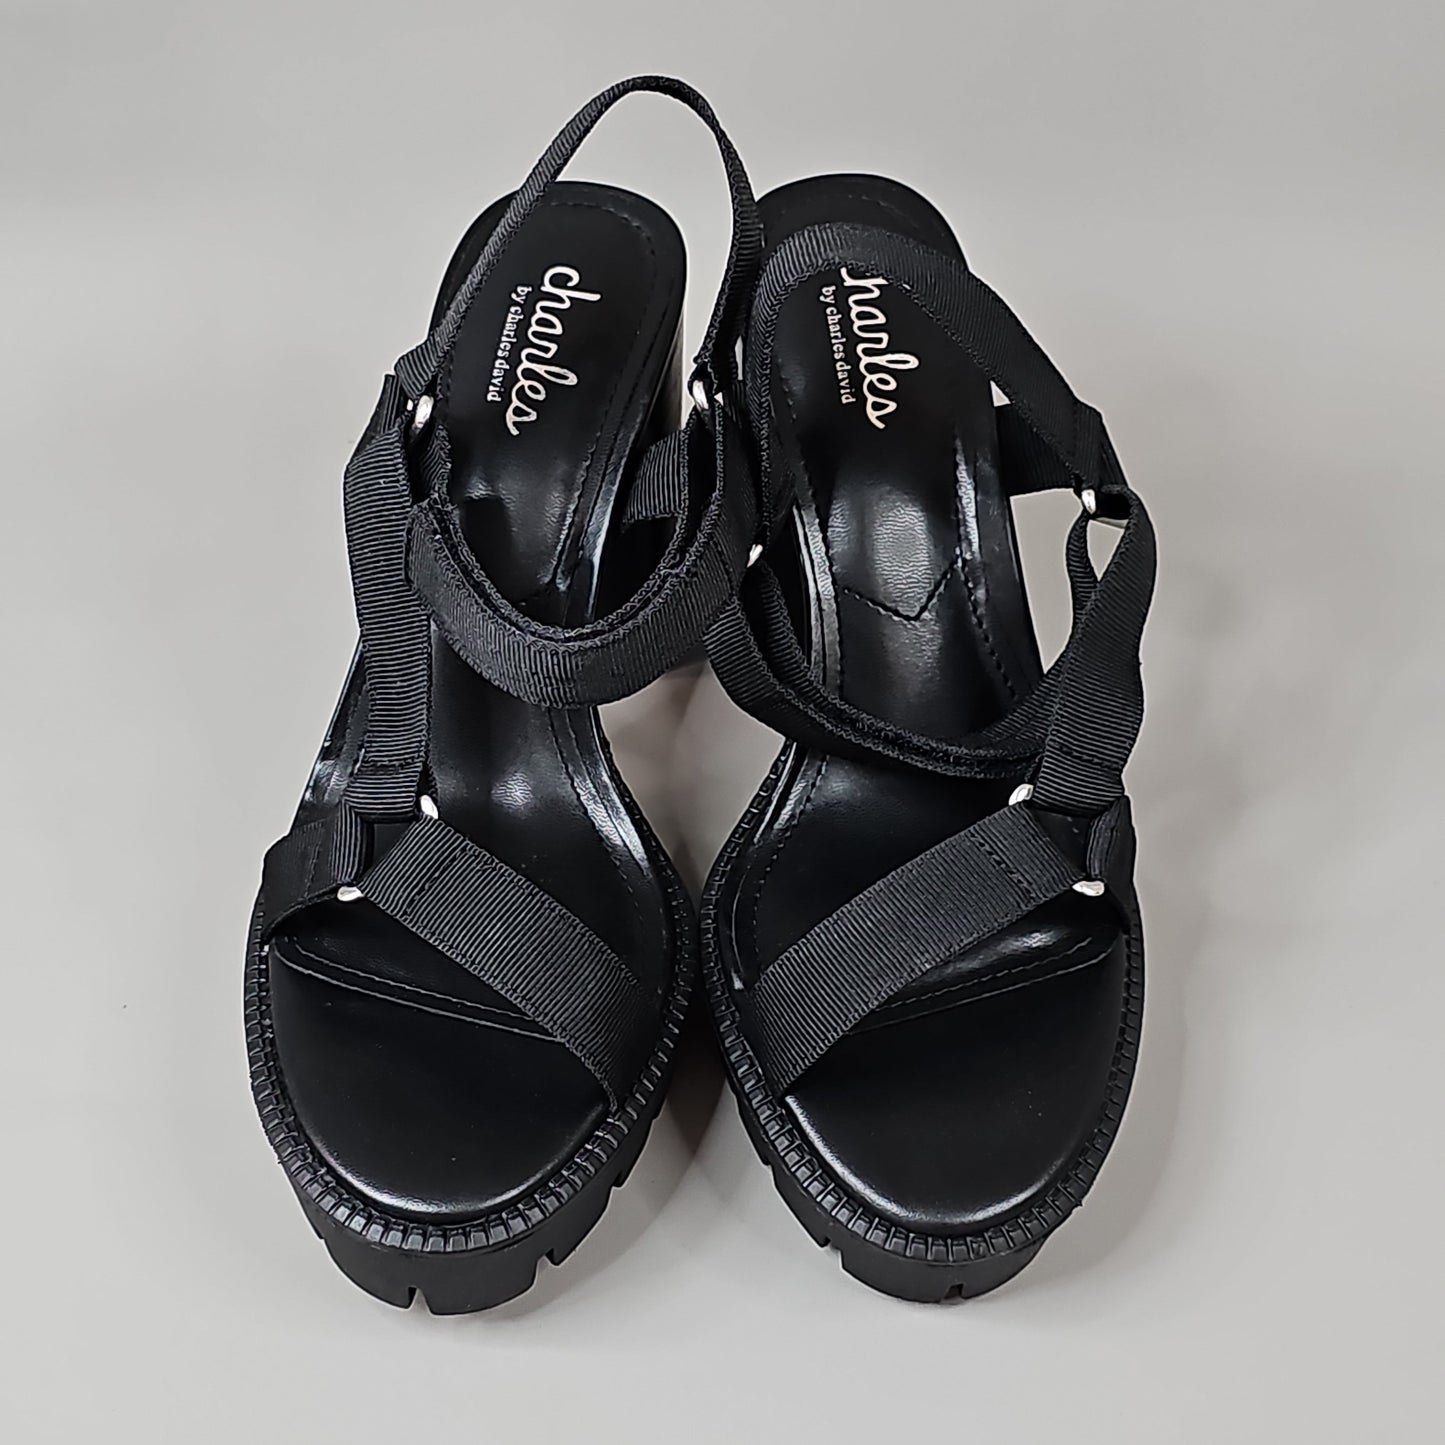 CHARLES BY CHARLES DAVID Women's Vast Sport Sandal Shoe Sz 9 M Black (New)